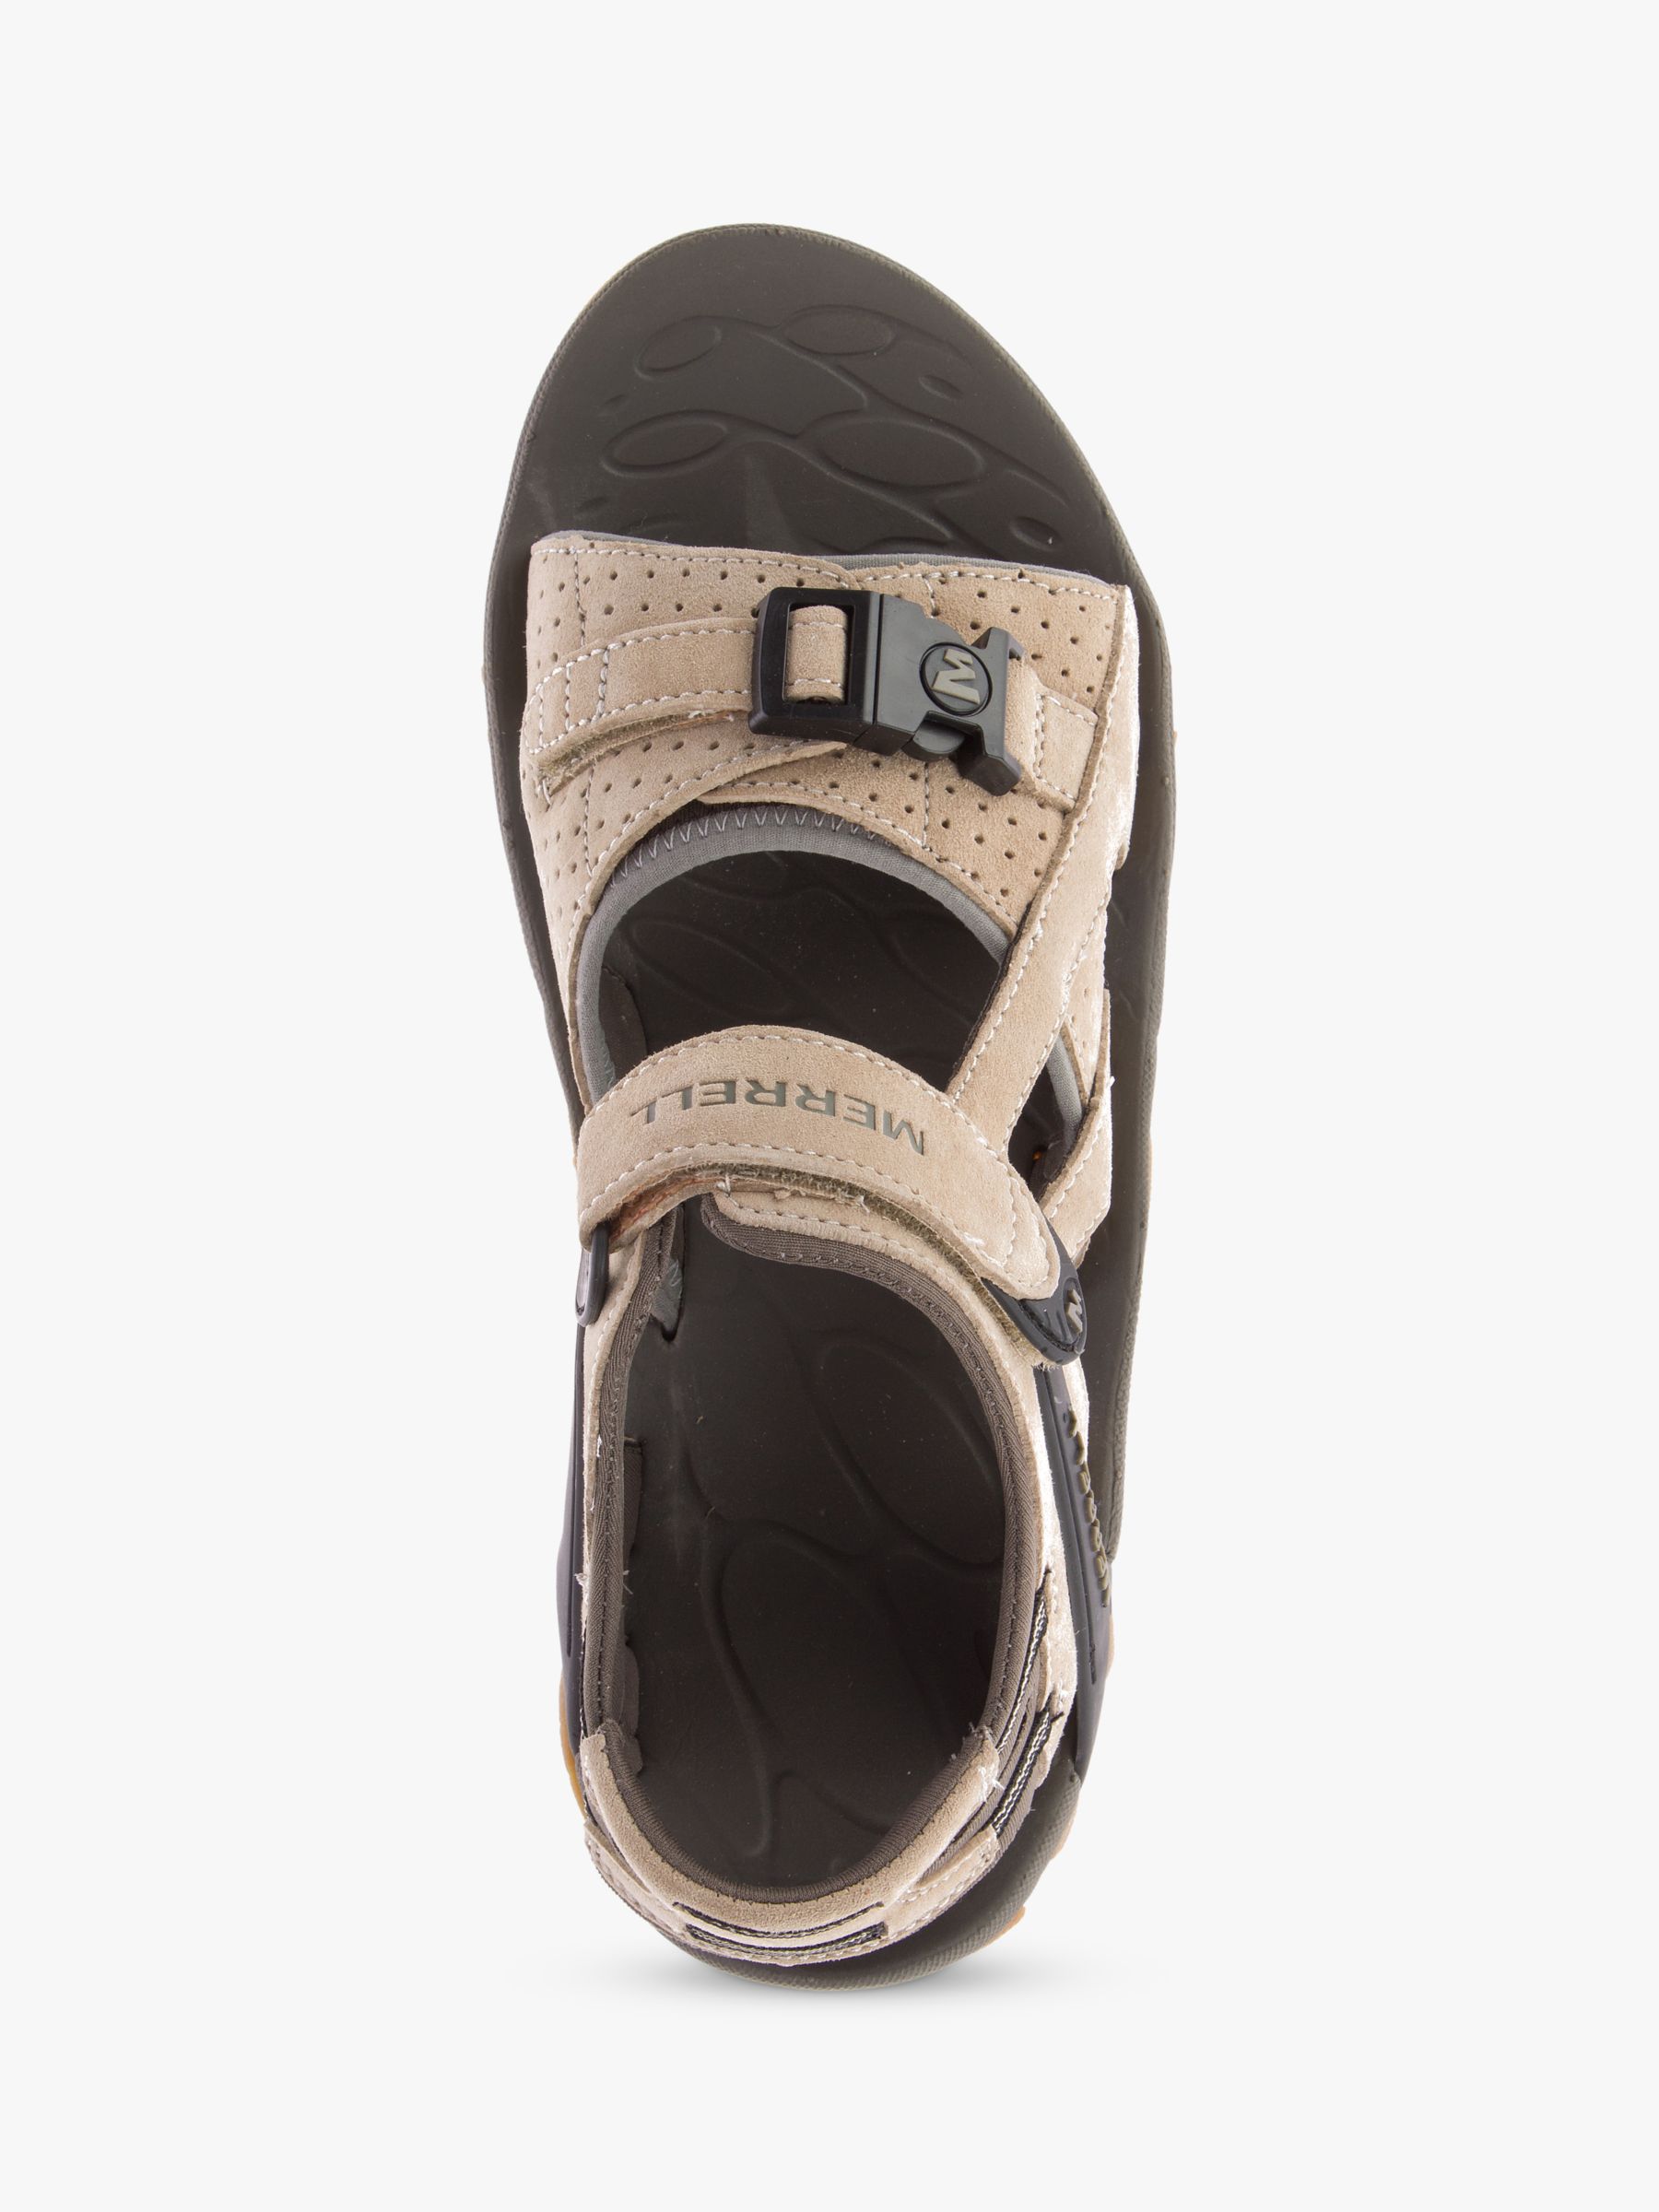 Merrell Kahuna 3 Women's Sandals, Classic Taupe, 8